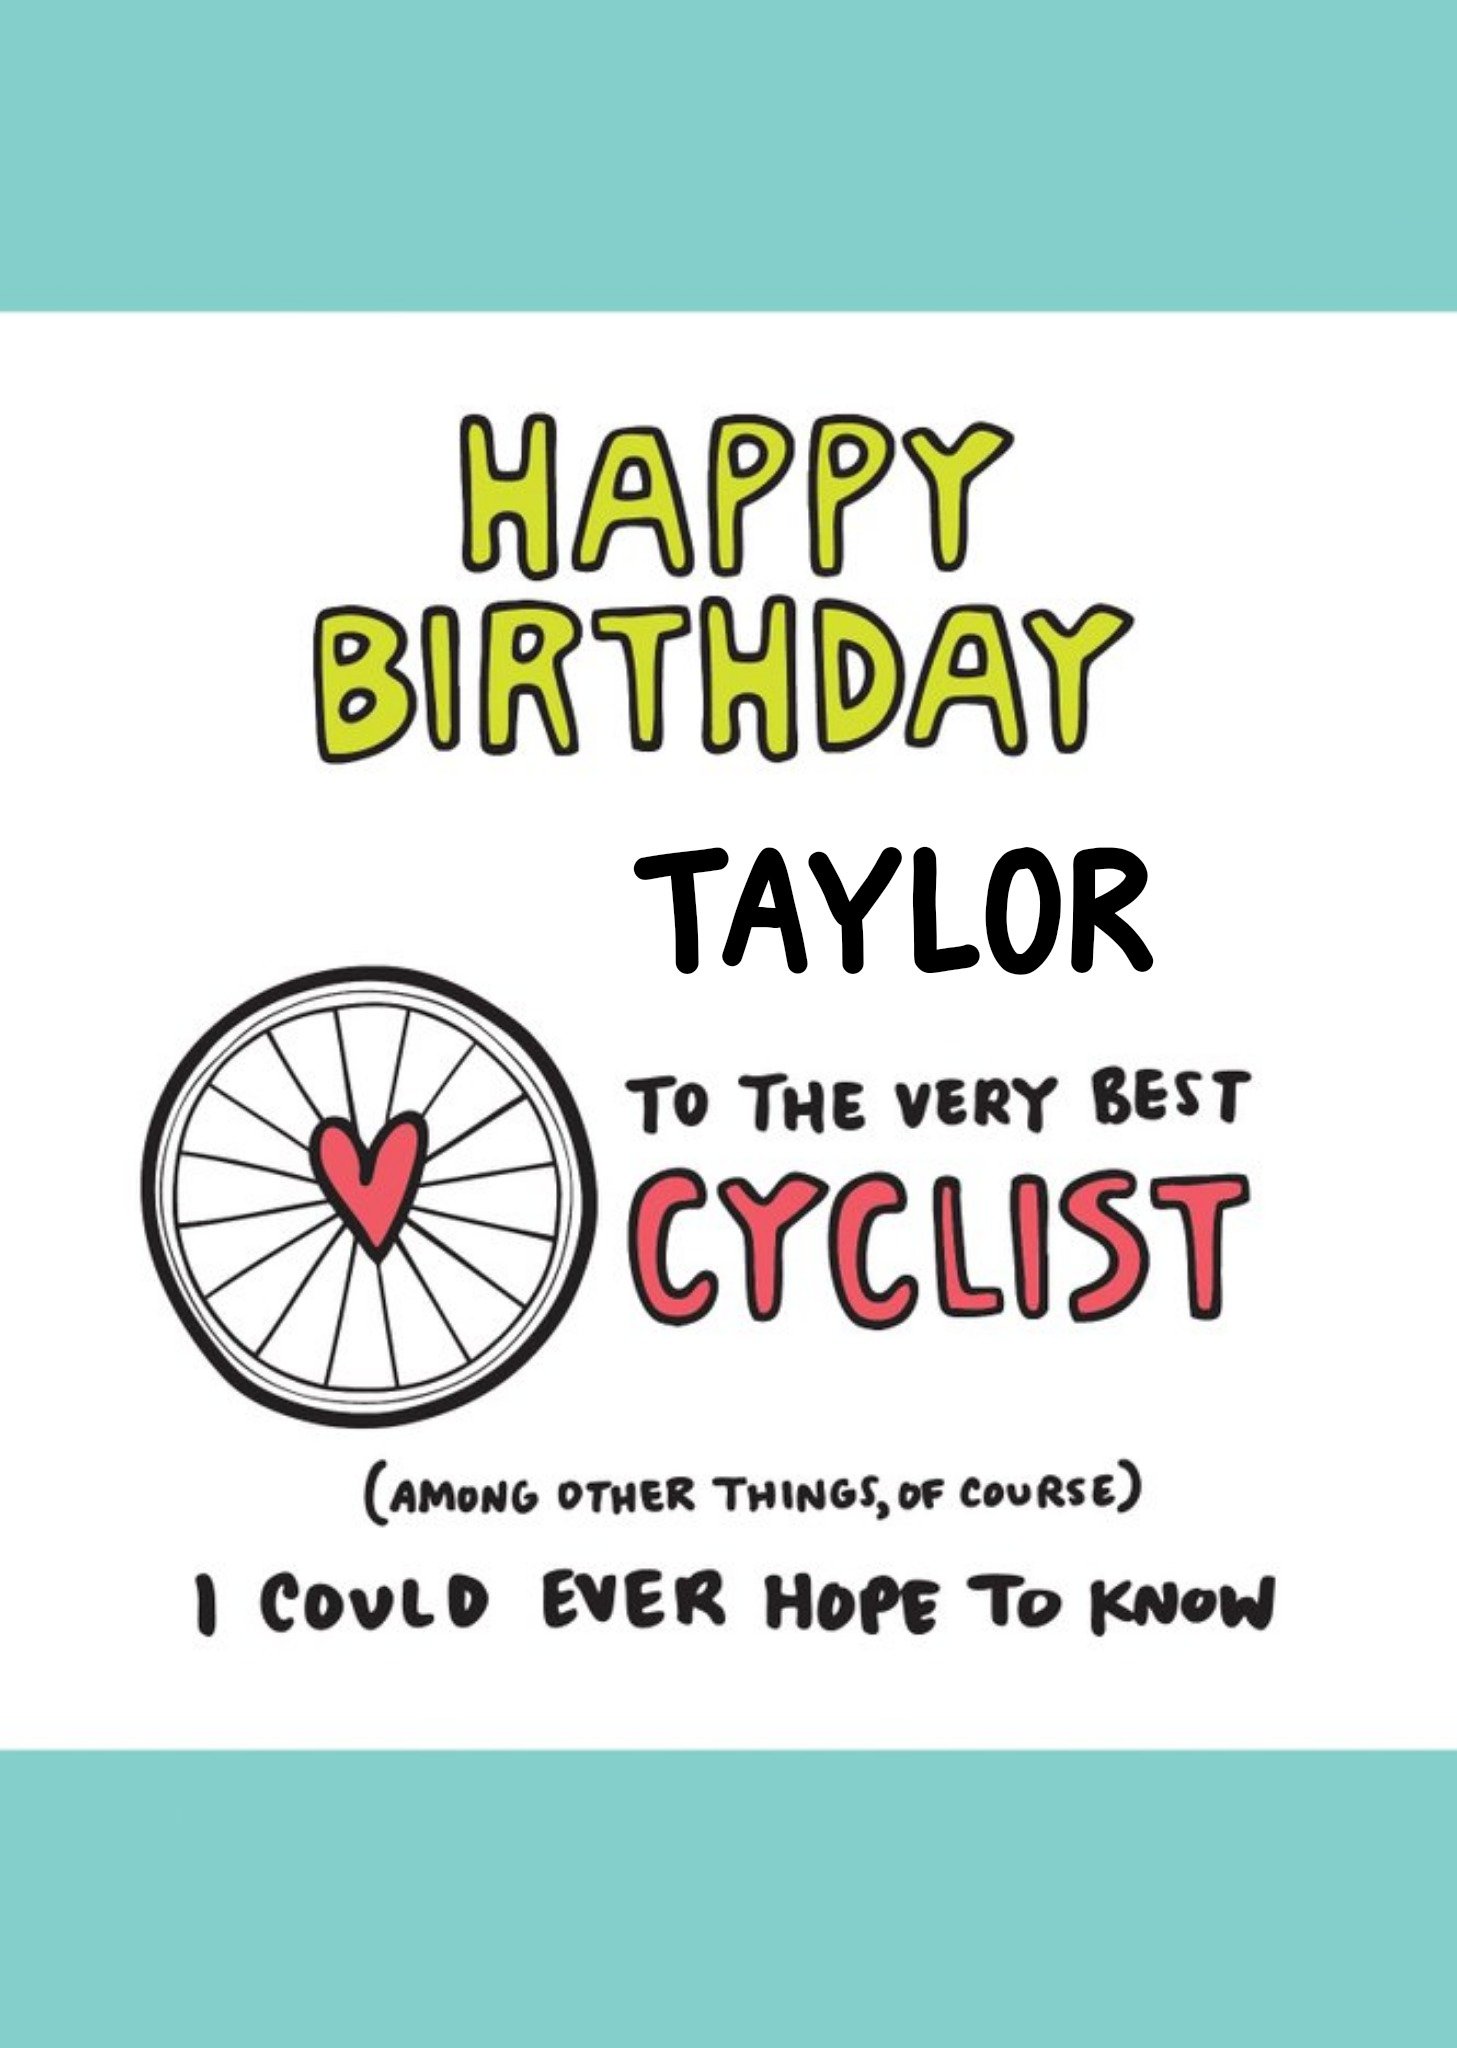 Moonpig Very Best Cyclist Birthday Card Ecard